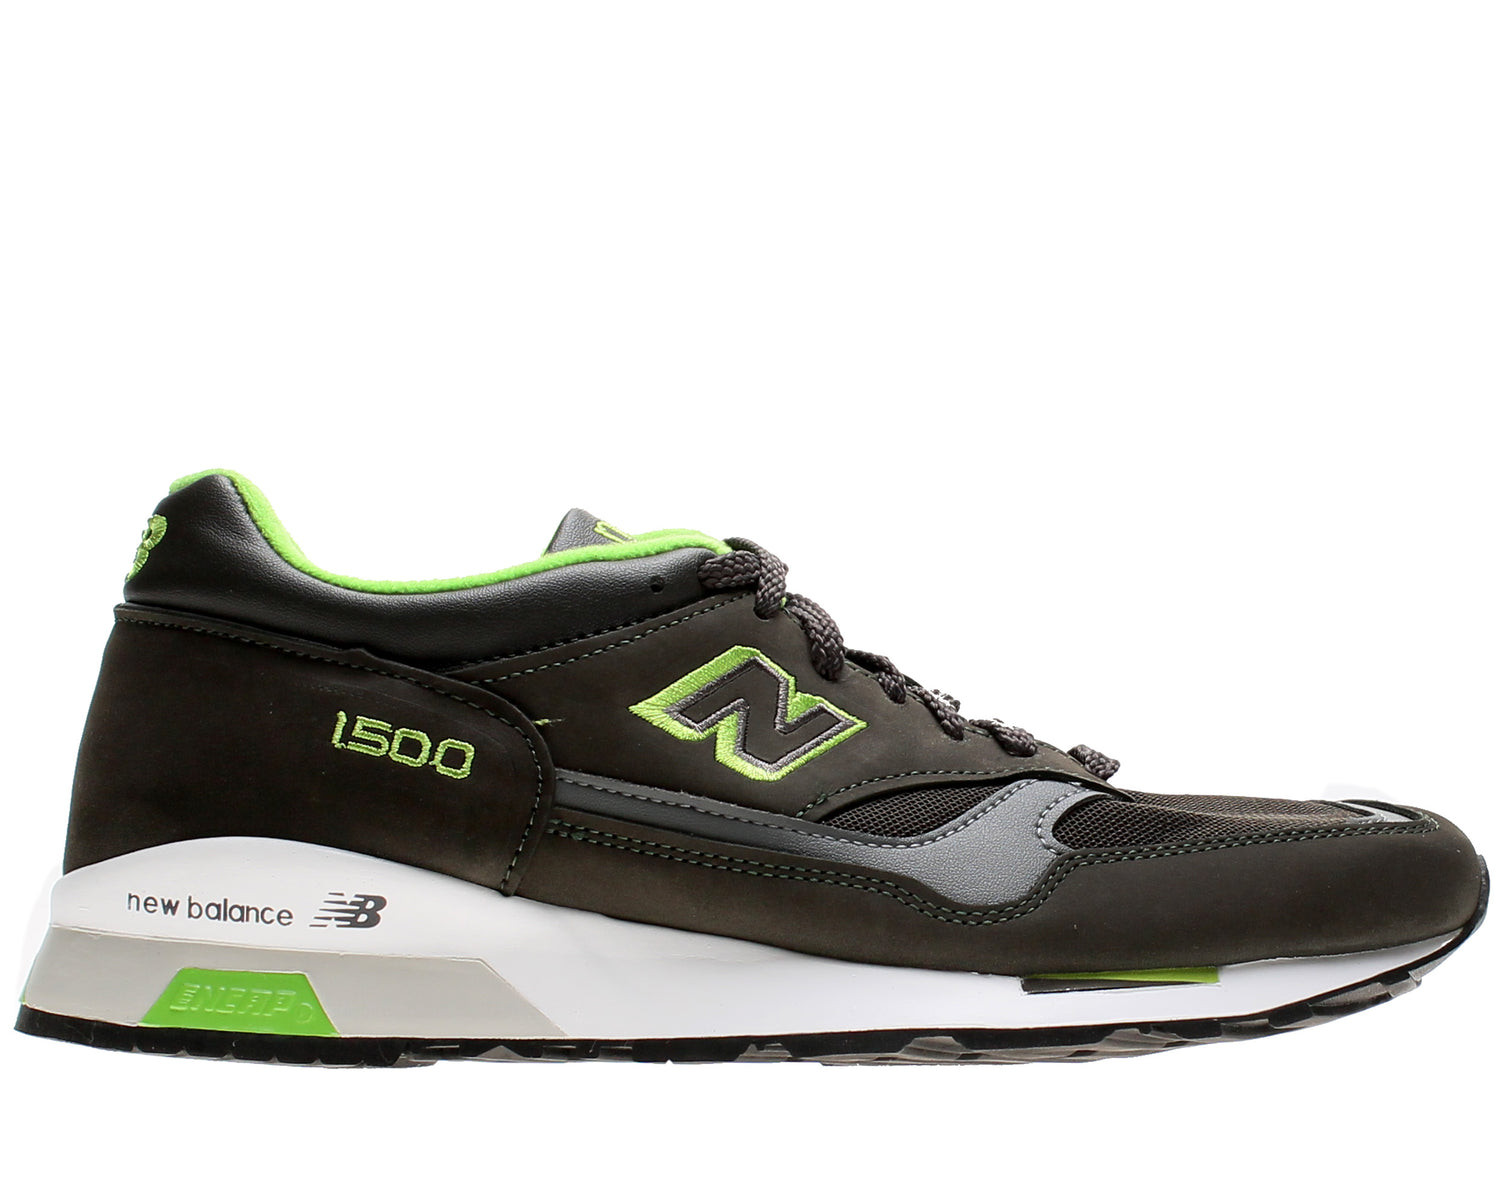 New Balance 1500 Classics Men's Running Shoes